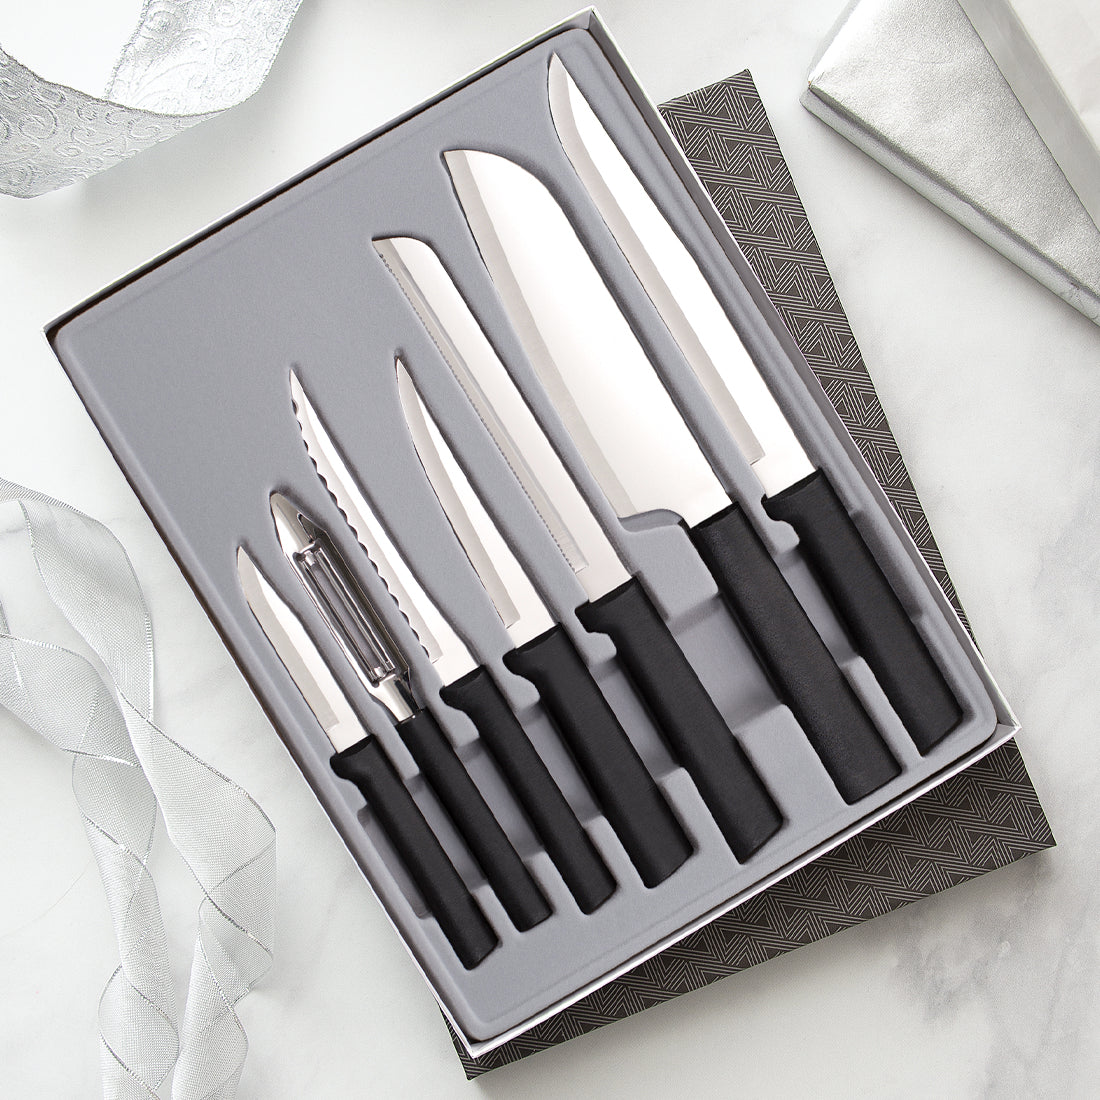 Rada Cutlery Deluxe Vegetable Peeler, Black Handle - Azure Standard